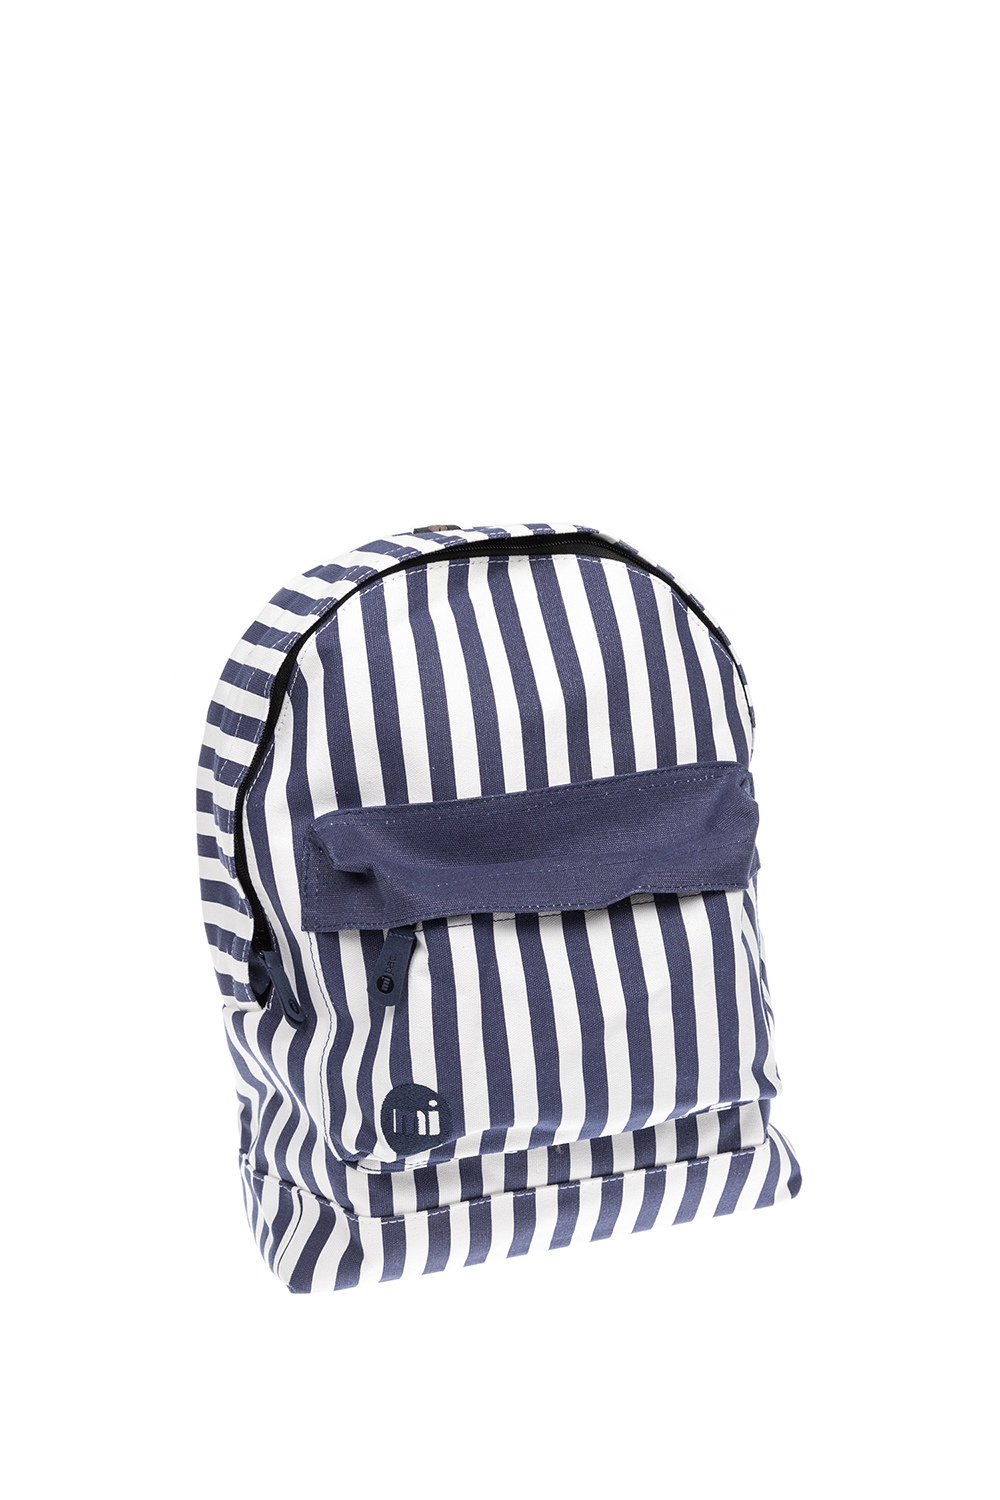 MI PAC – Γυναικεία τσάντα Mi-Pac μπλε-λευκή